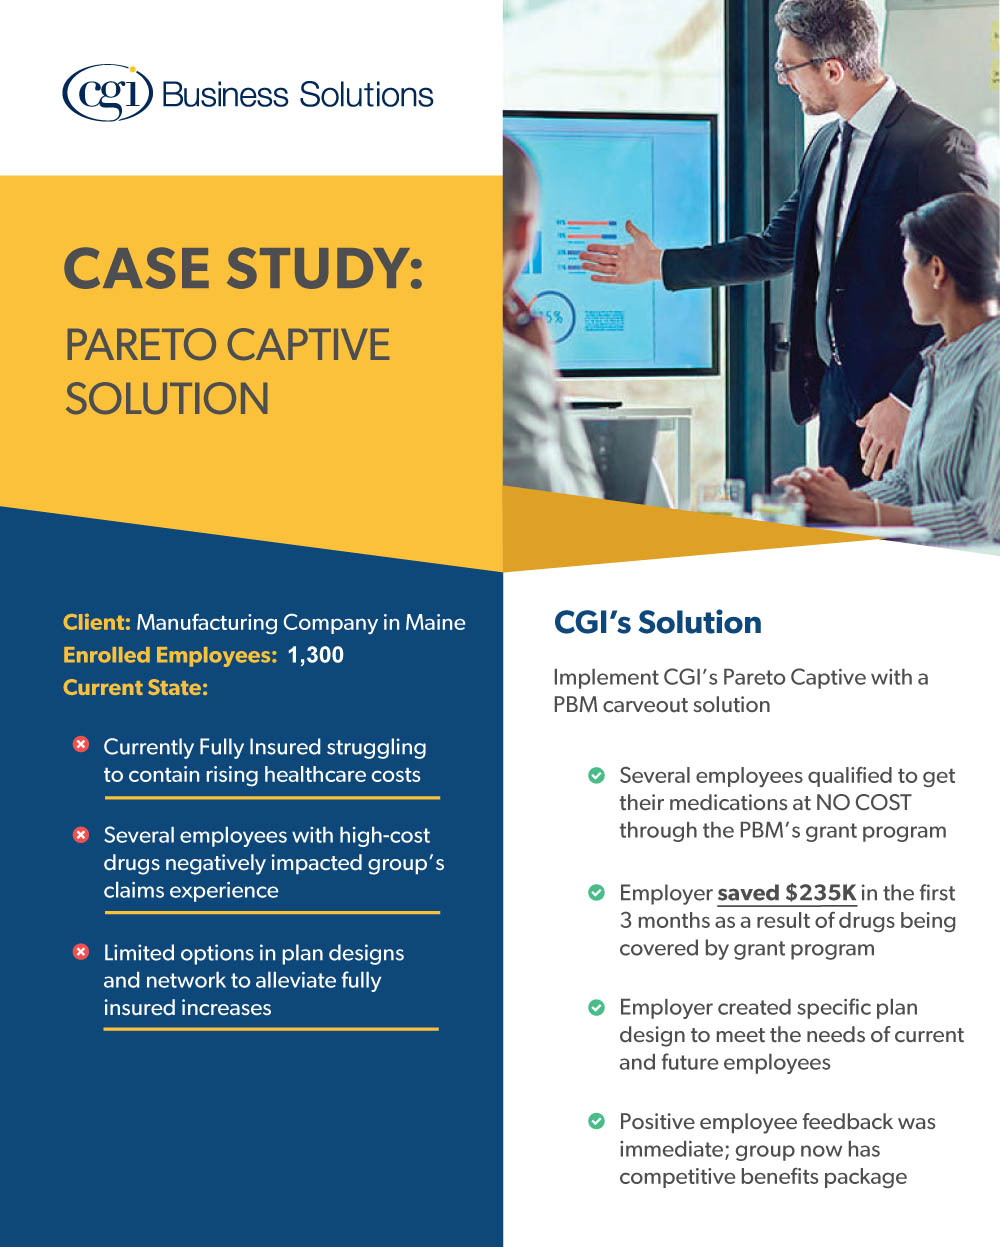 Pareto Captive Solution: PBM Carveout